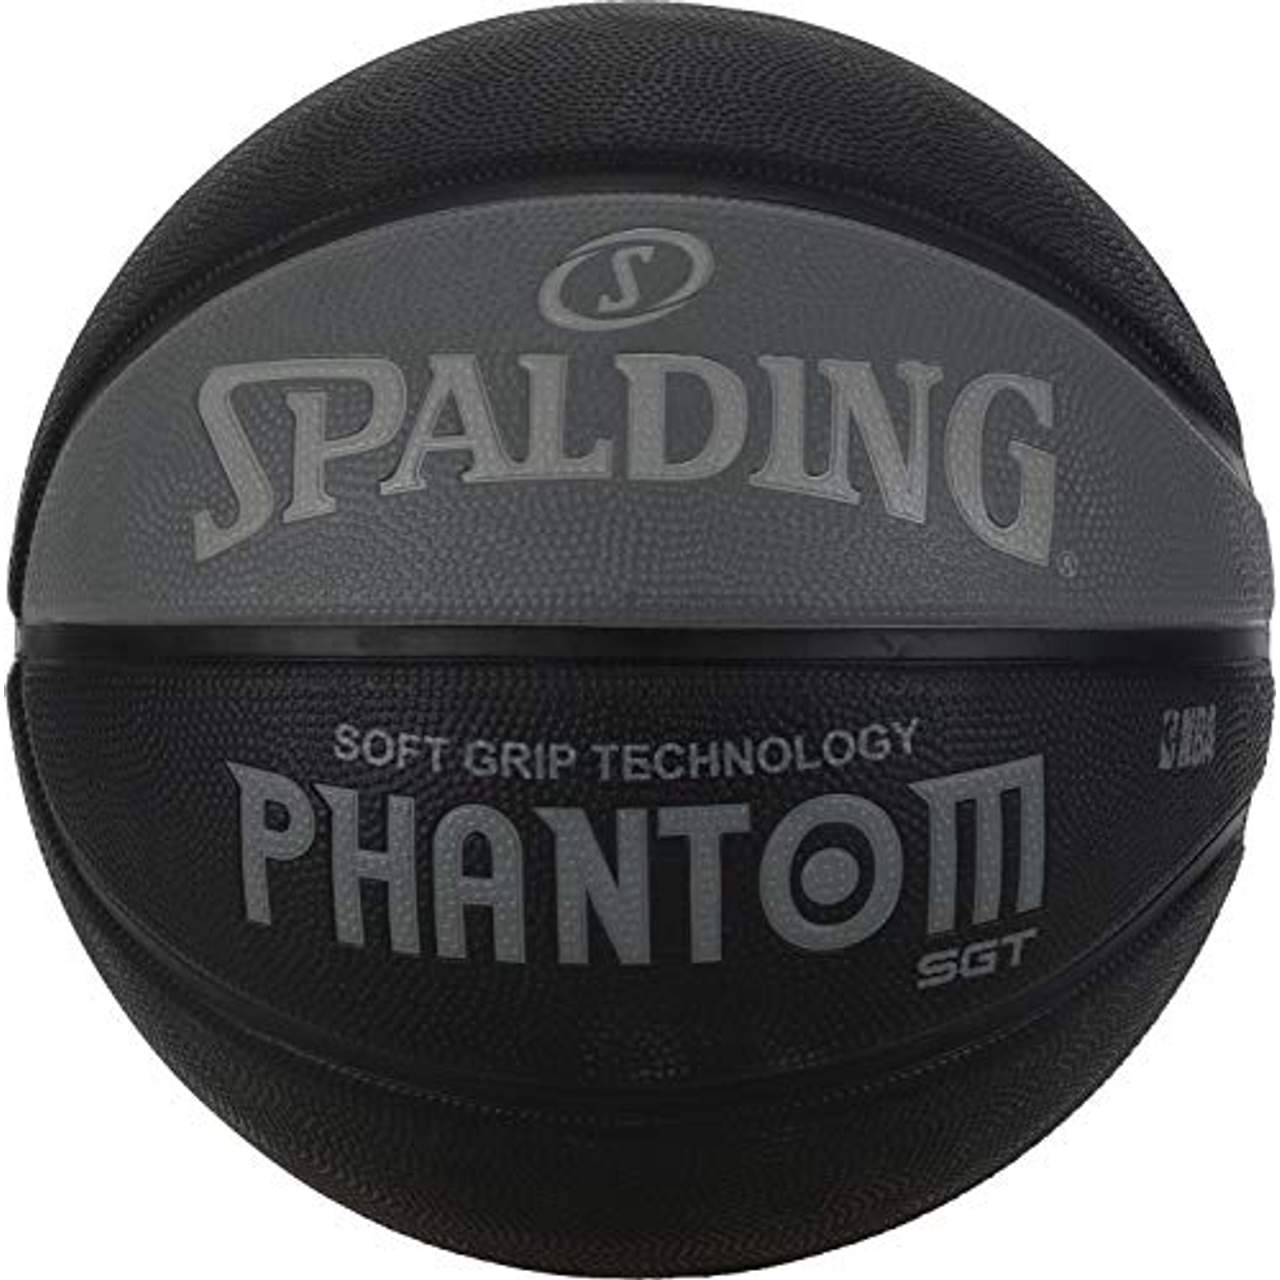 Spalding Unisex-Adult 3001559031517_7 Basketball